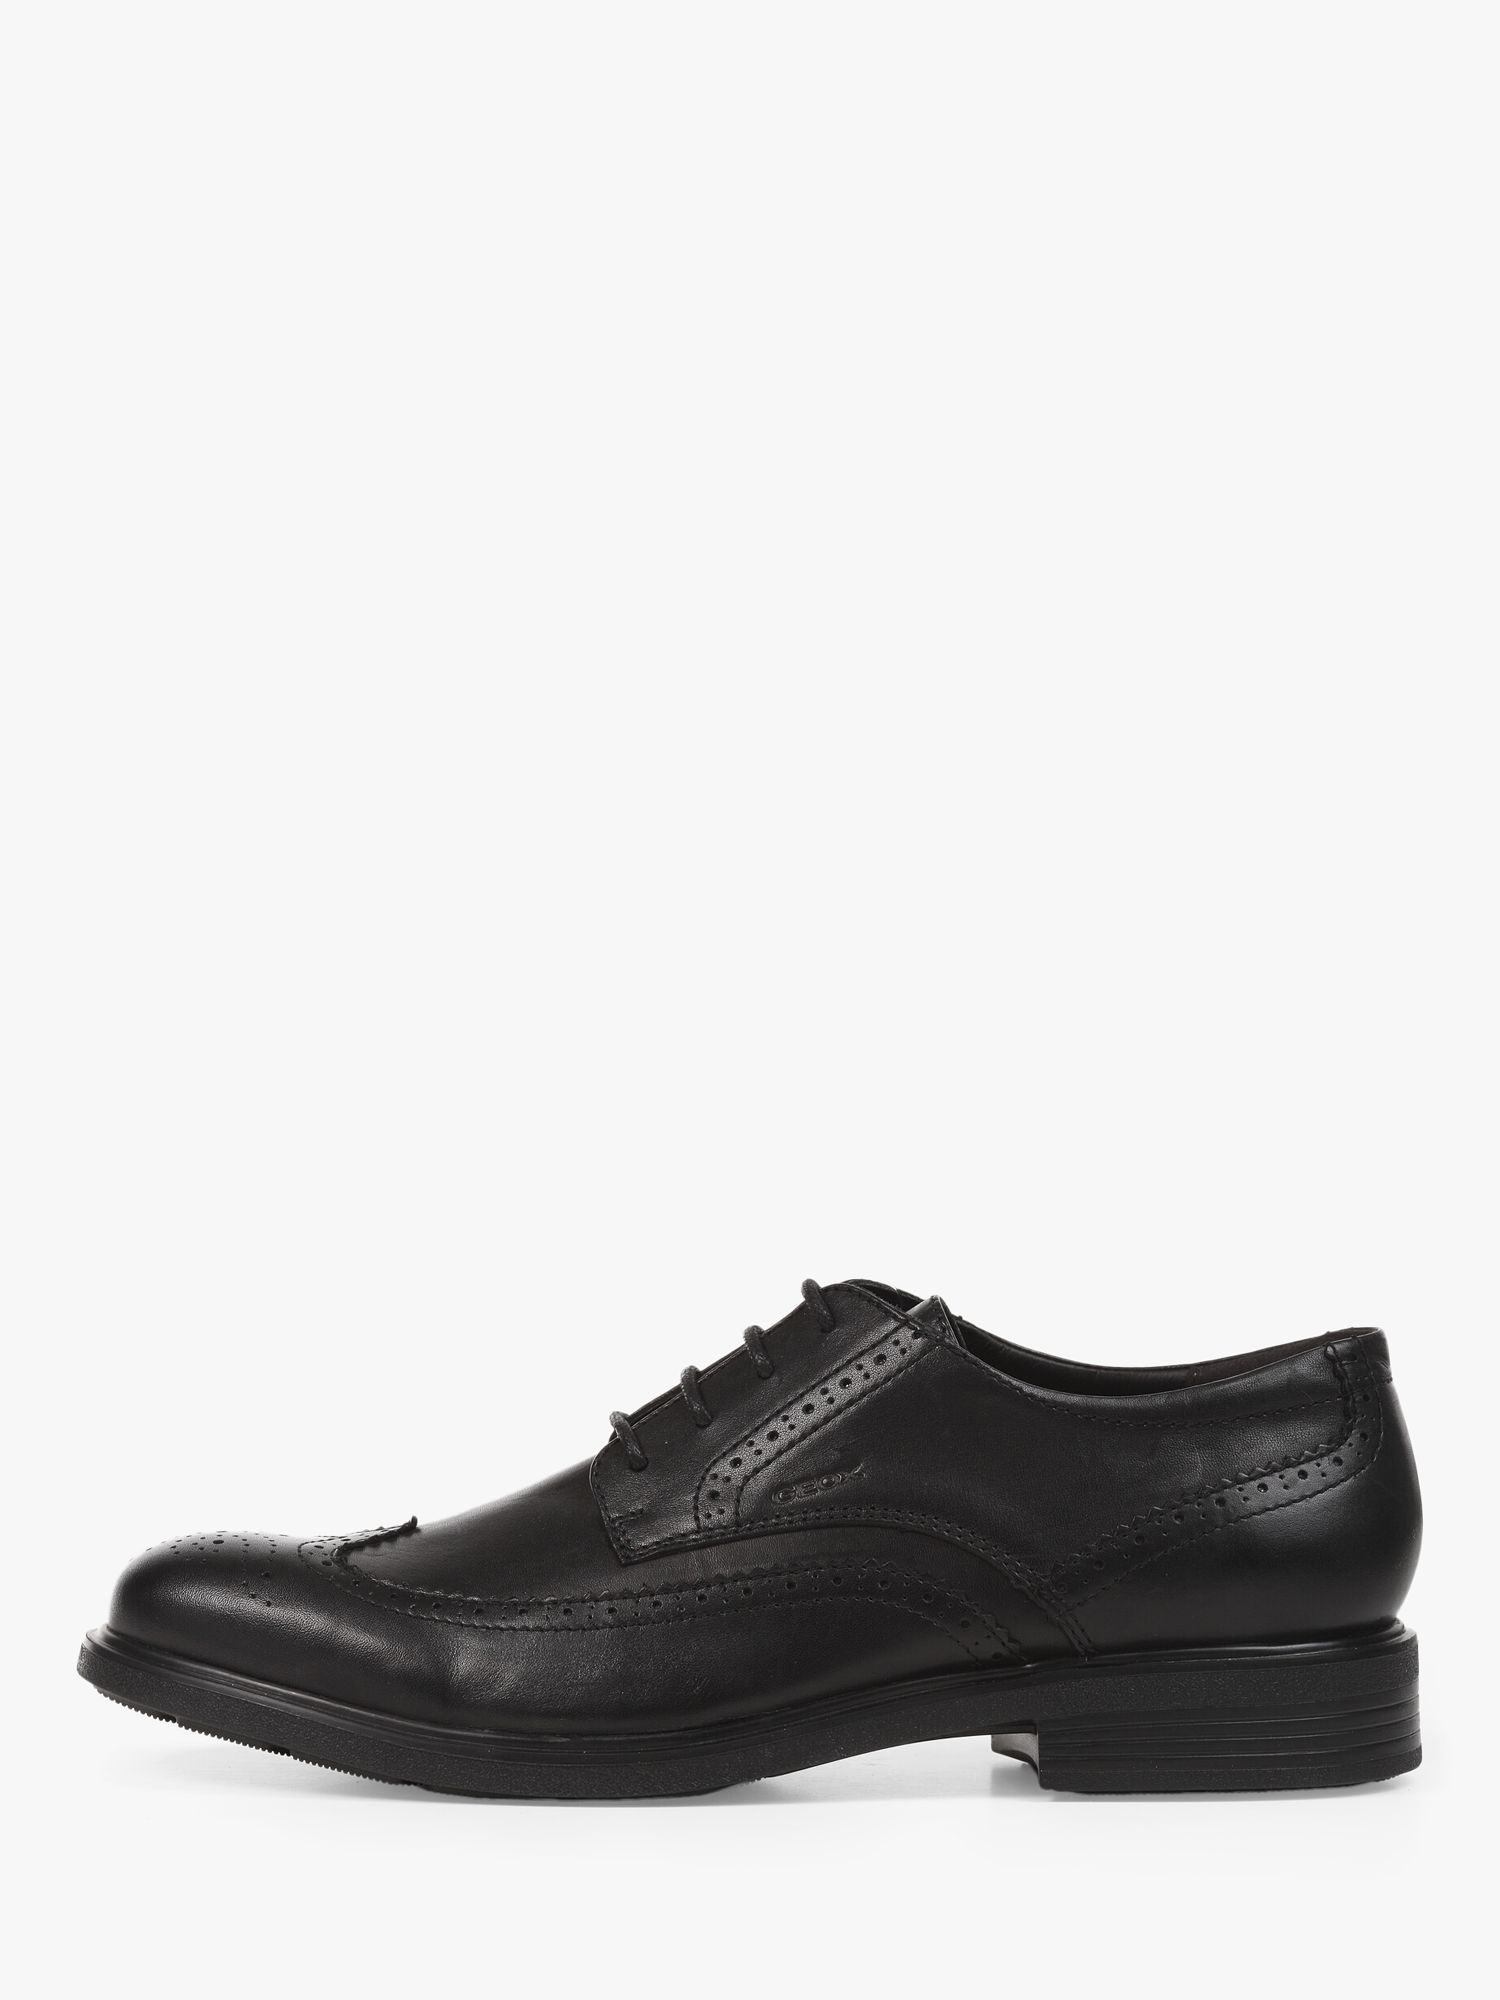 Geox Dublin Derby Shoes, Black, Black at John Lewis & Partners